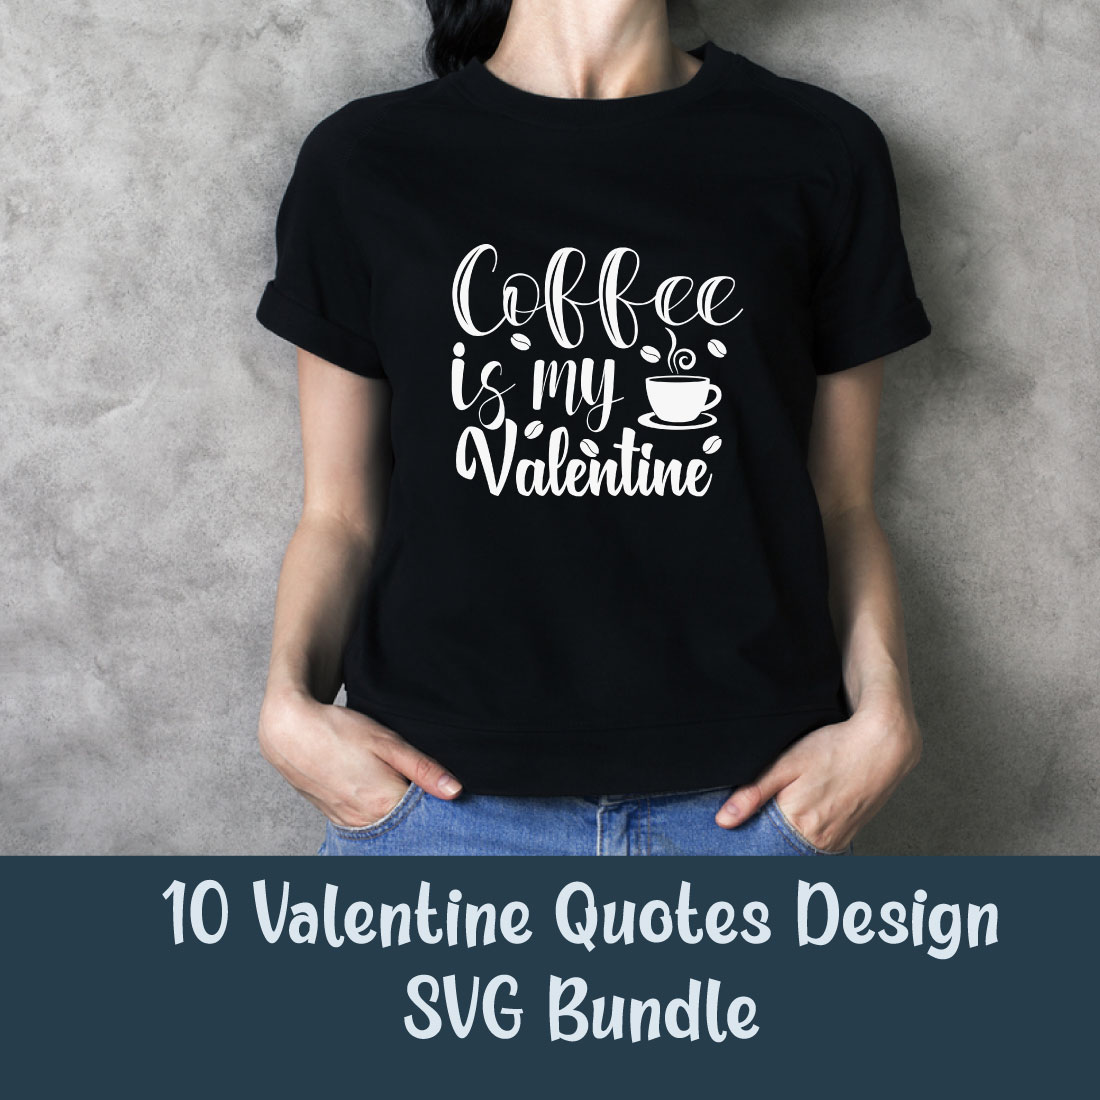 10 Valentine Quotes Design SVG Bundle main cover.